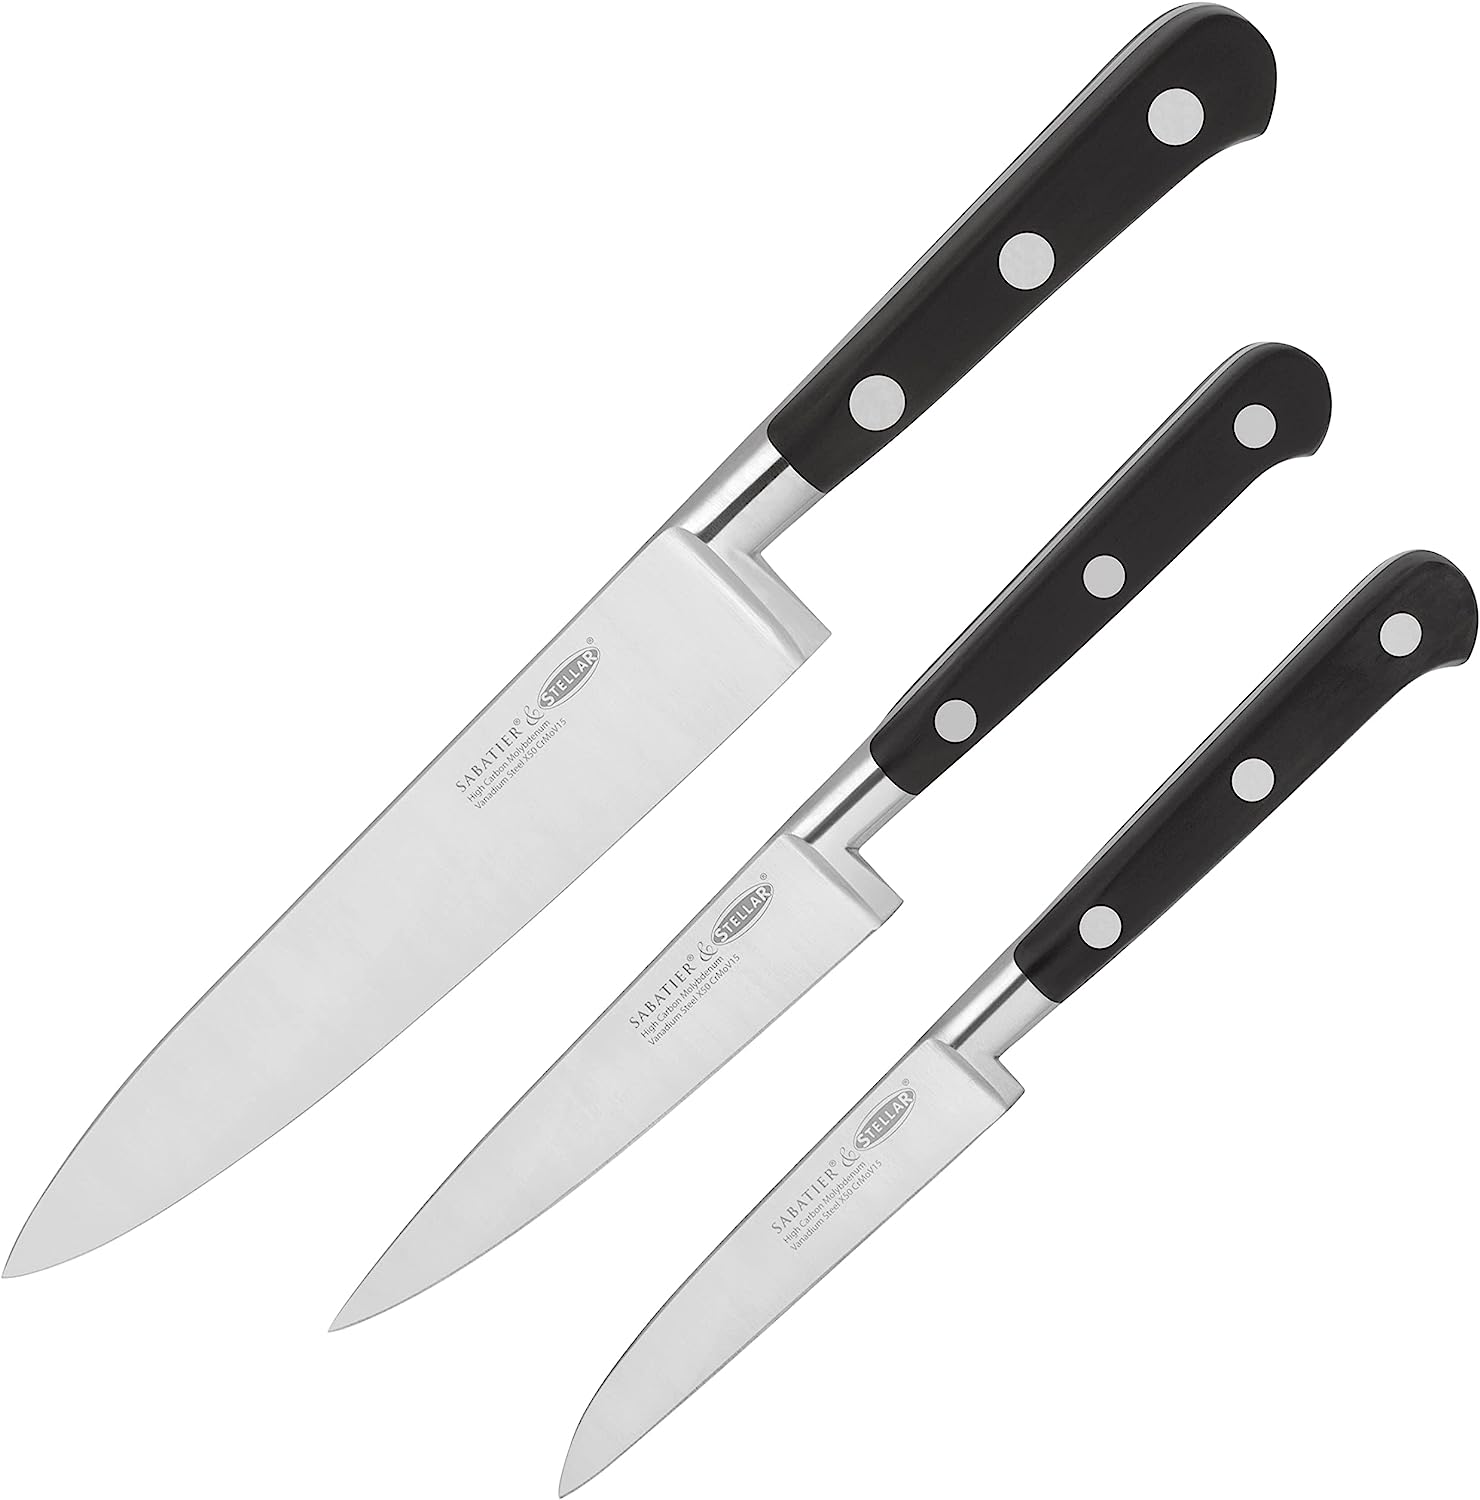 Gordon Ramsay Royal Doulton MAZE 15CM (6) Cook's Chef's Knife